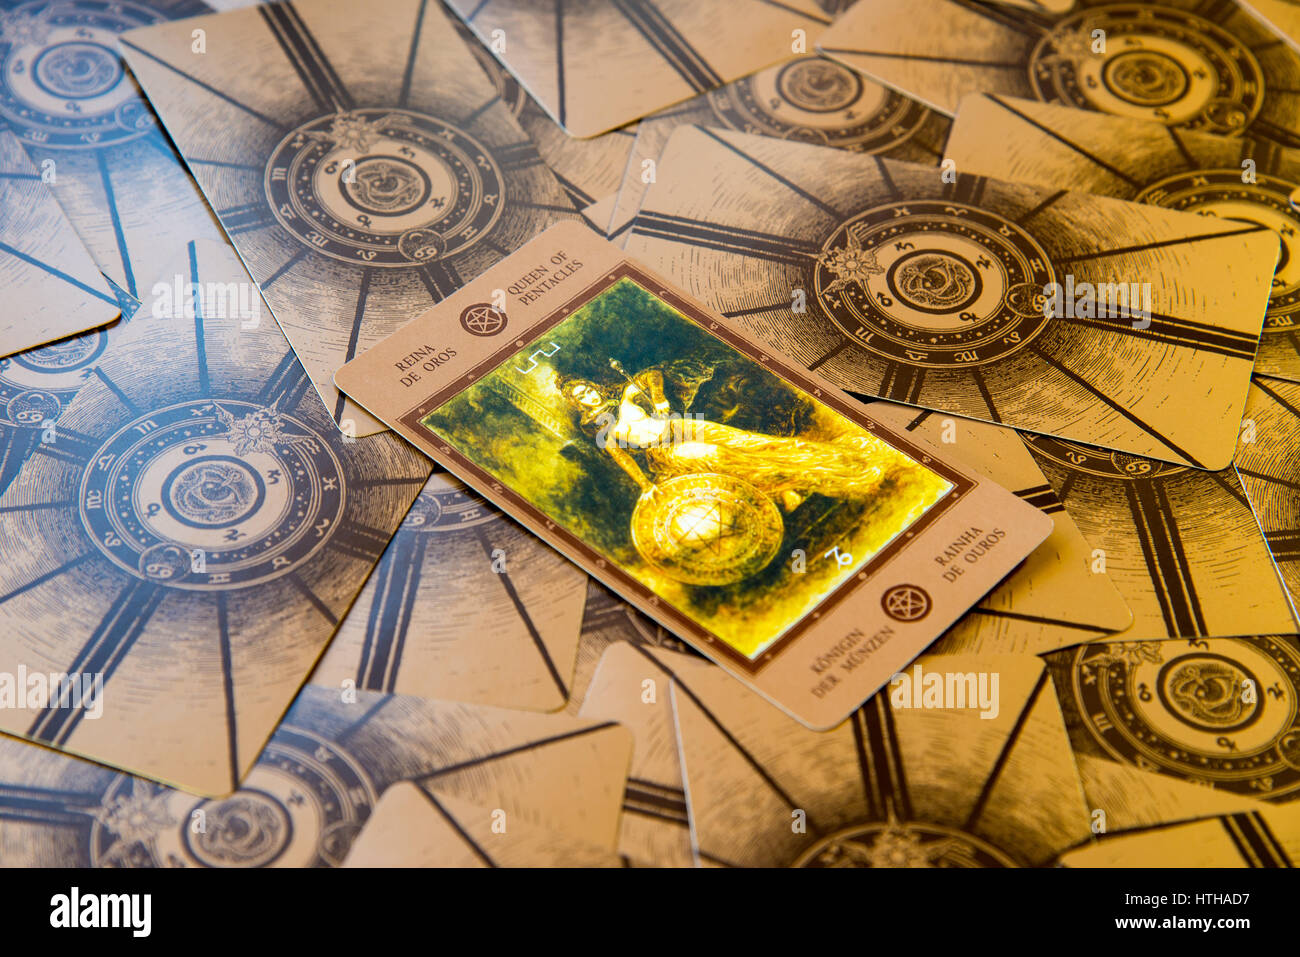 Moscow, Russia - January 29, 2017: Tarot card Qeen of Pentacles. Labirinth tarot deck. Esoteric background Stock Photo